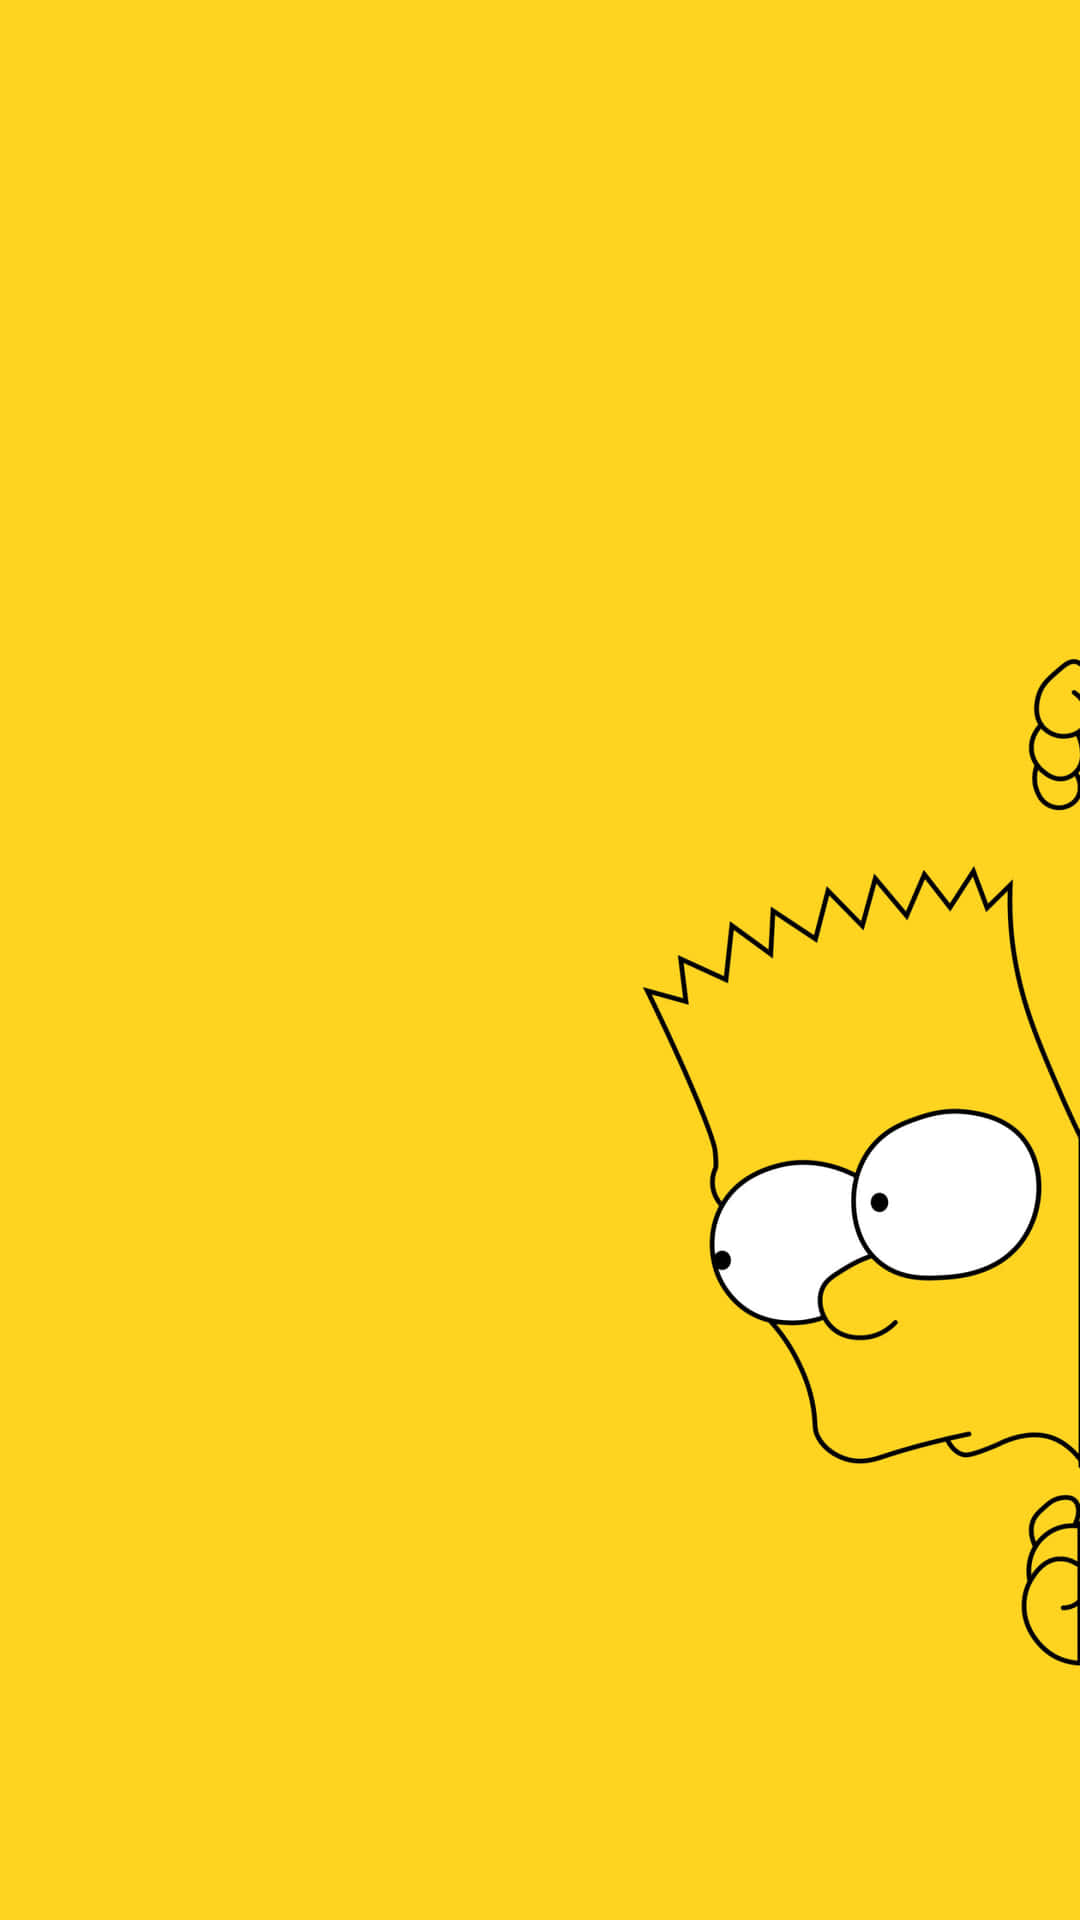 Download Cool Bart Simpson Aesthetic Wallpaper | Wallpapers.com